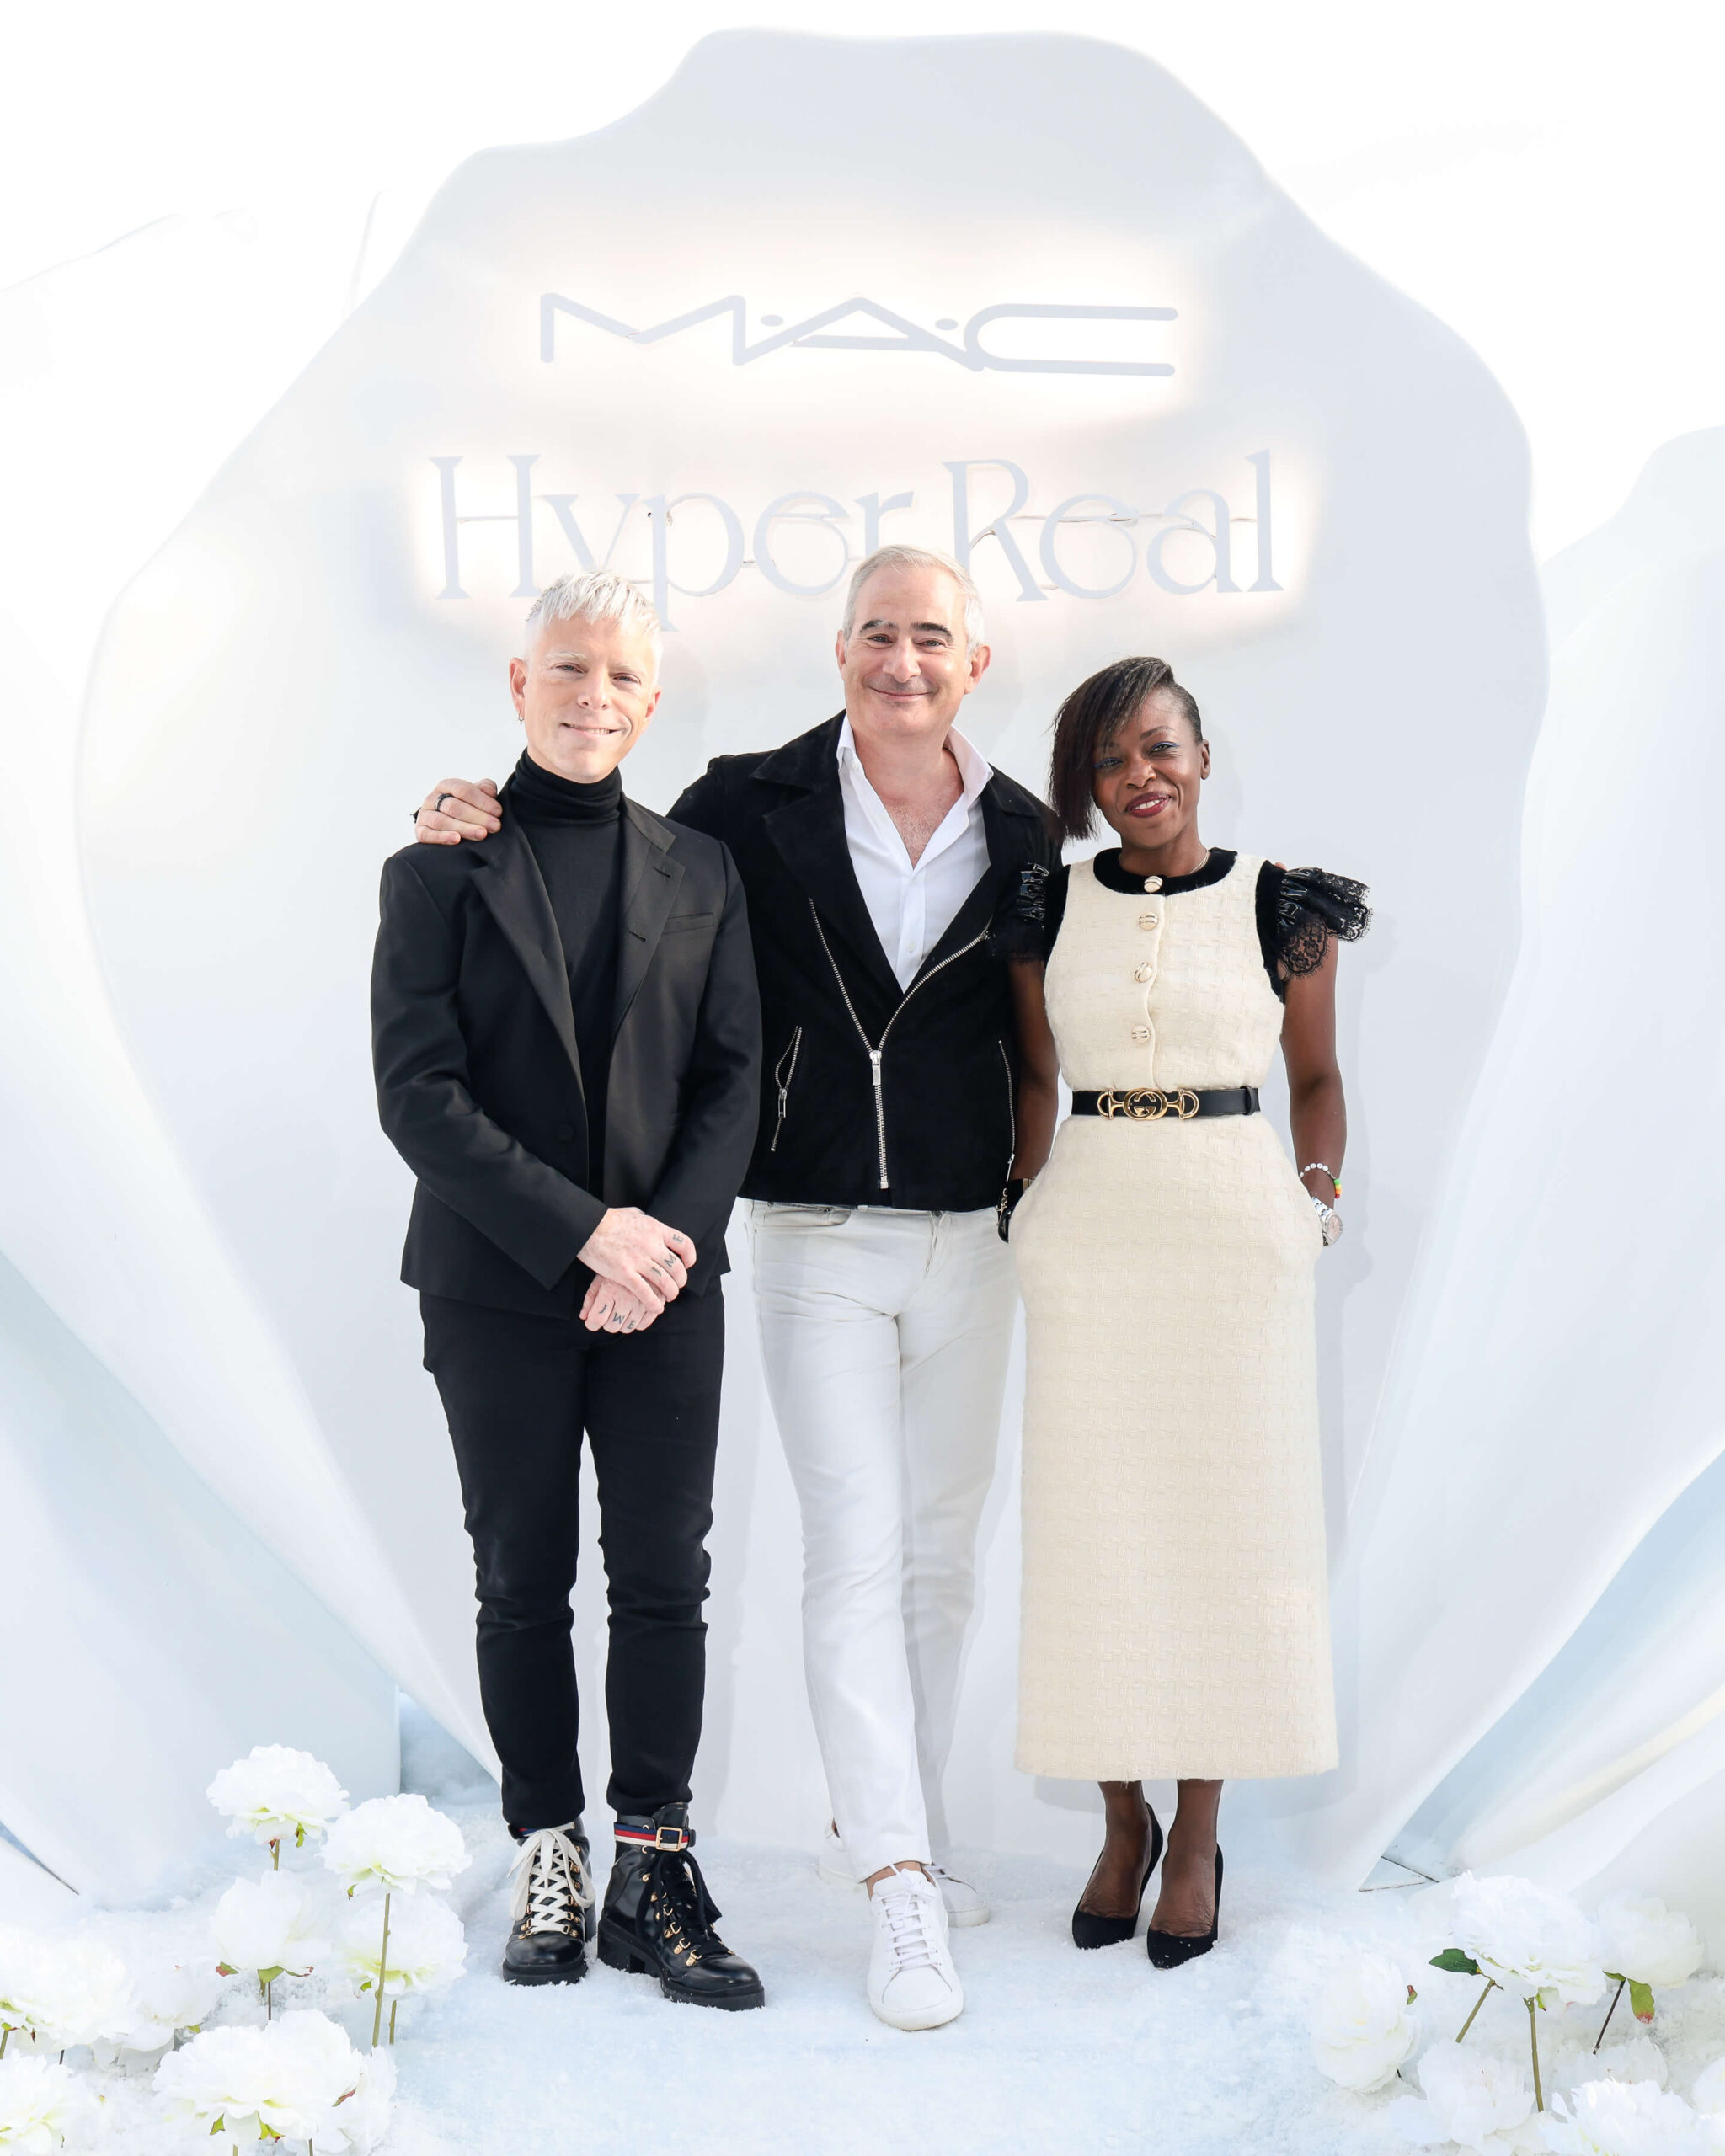 Aïda with MAC Global Brand President Philippe Pinatel and MAC Global Creative Director Drew Elliot